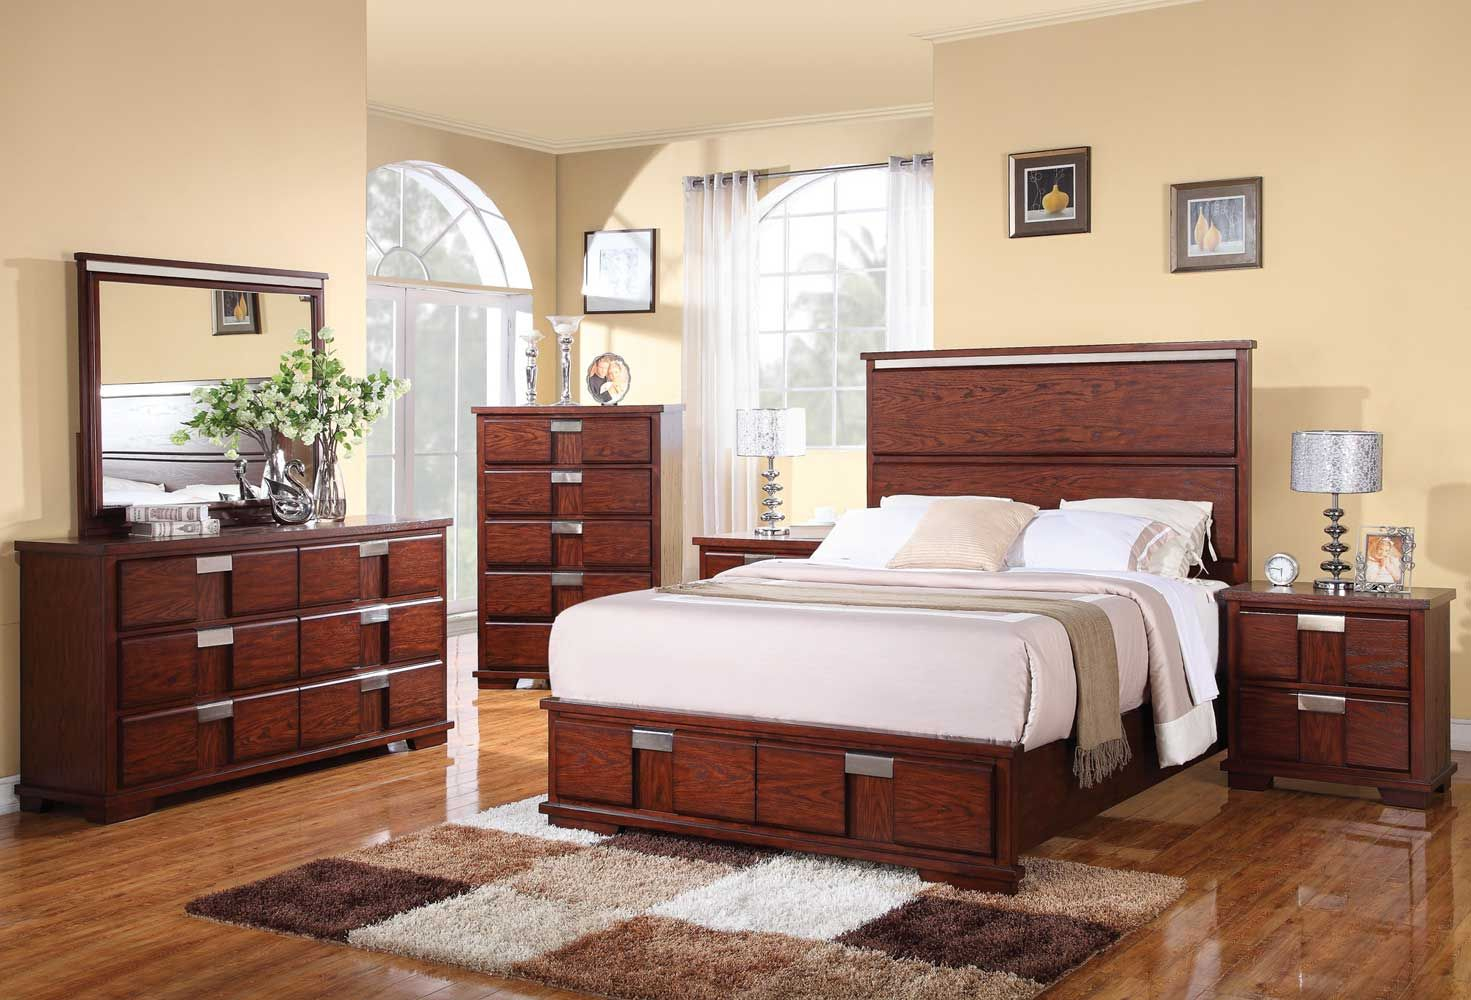 Coaster Hyland Bedroom Set Dark Cherry In 2019 Bedroom Furniture regarding dimensions 1471 X 1000